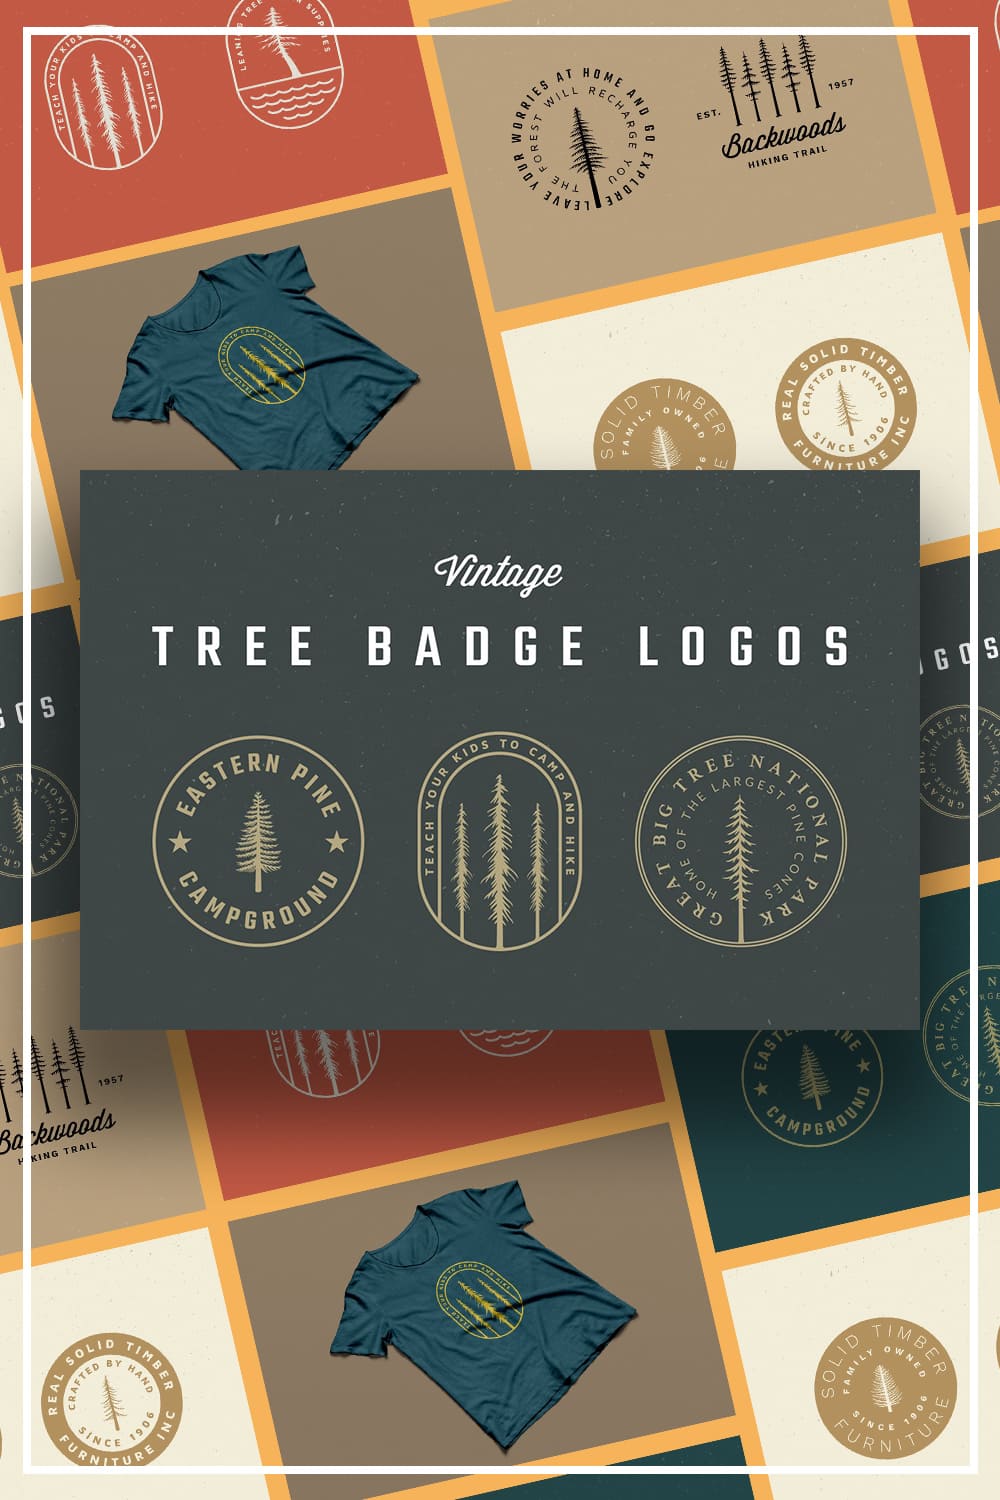 vintage tree badge logos pinterest image.